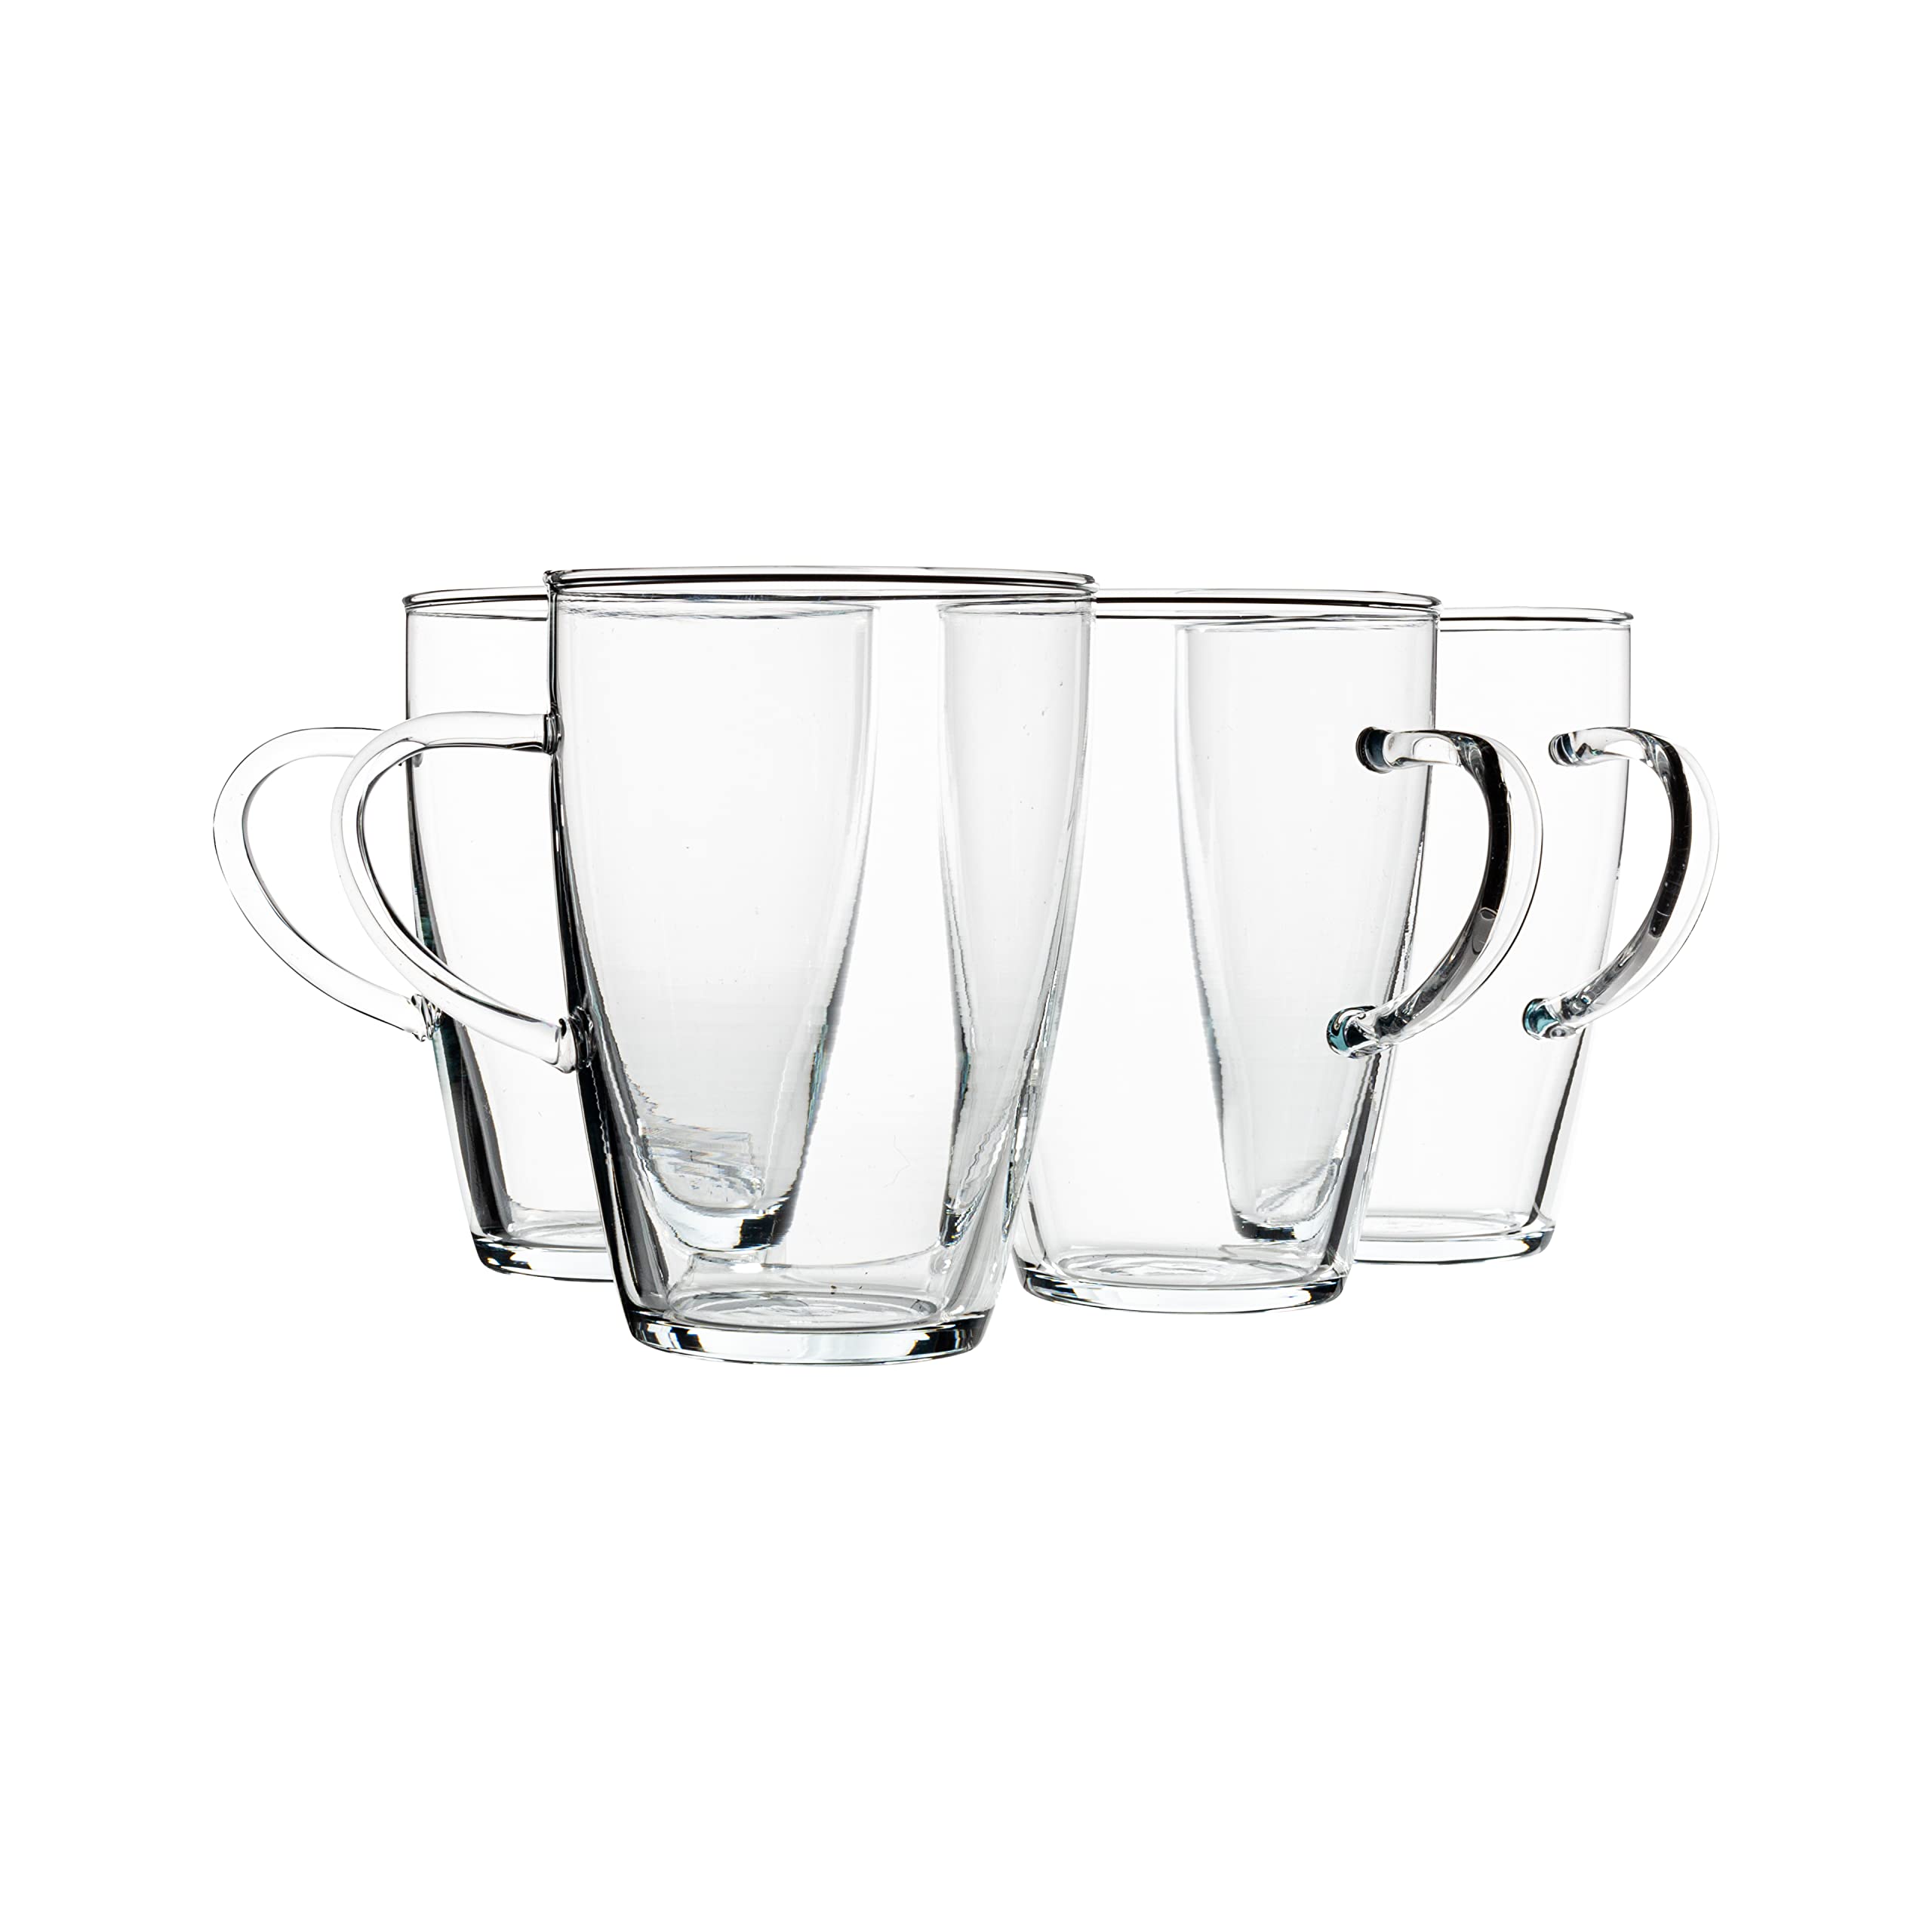 Simax glass coffee Mugs, 135 Oz Borosilicate glass Mugs for Hot Beverages, clear  Tea Mug, Mugs for coffee, glass Mugs with Handl